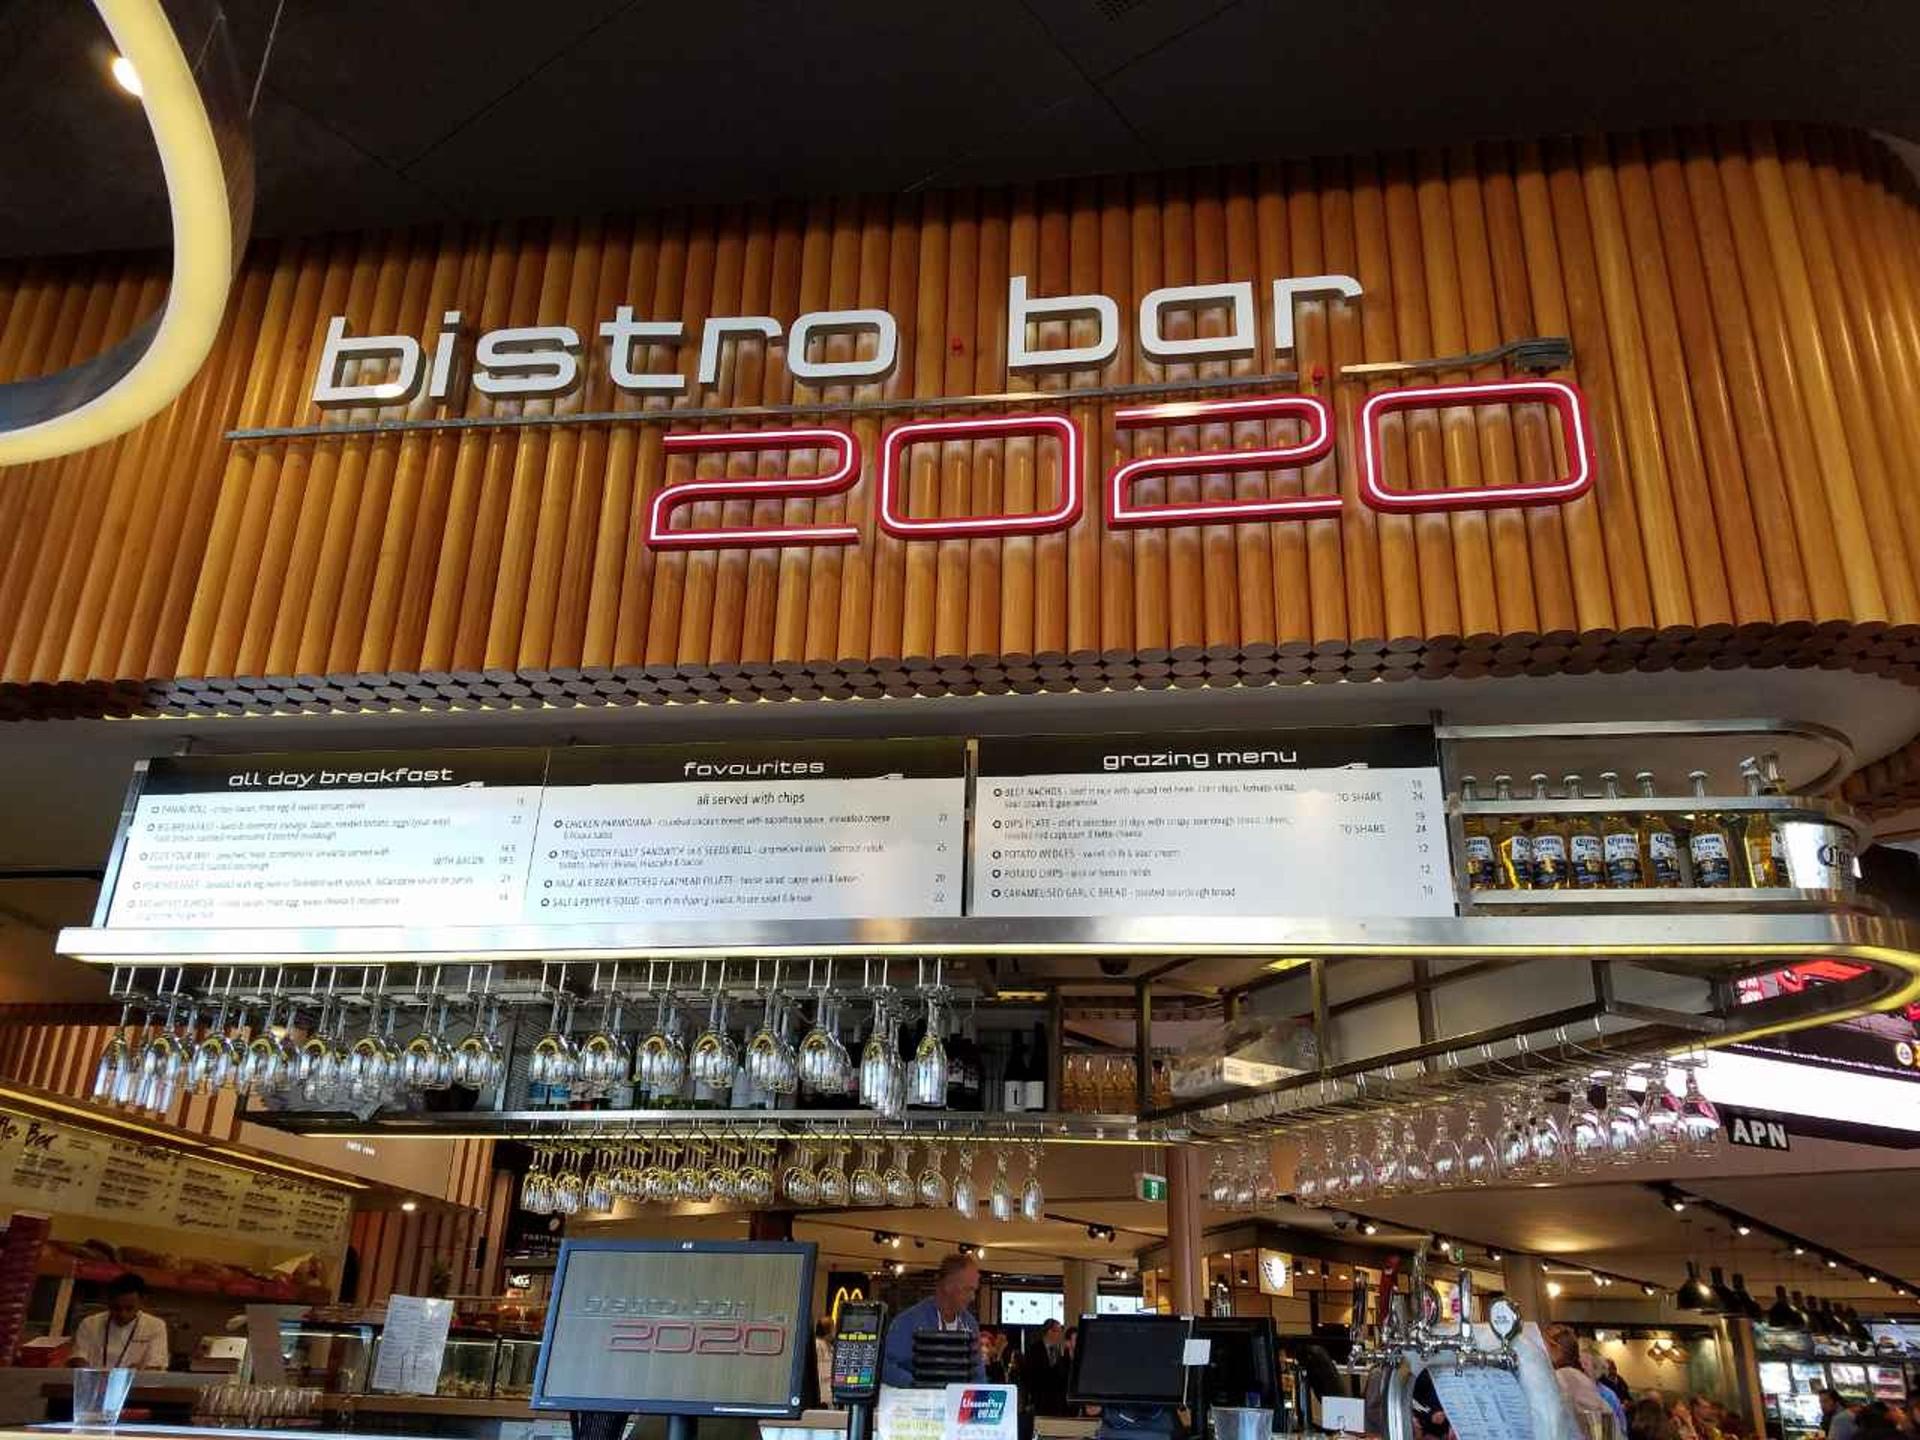 Bistro 2020 & Bar image 9 of 23